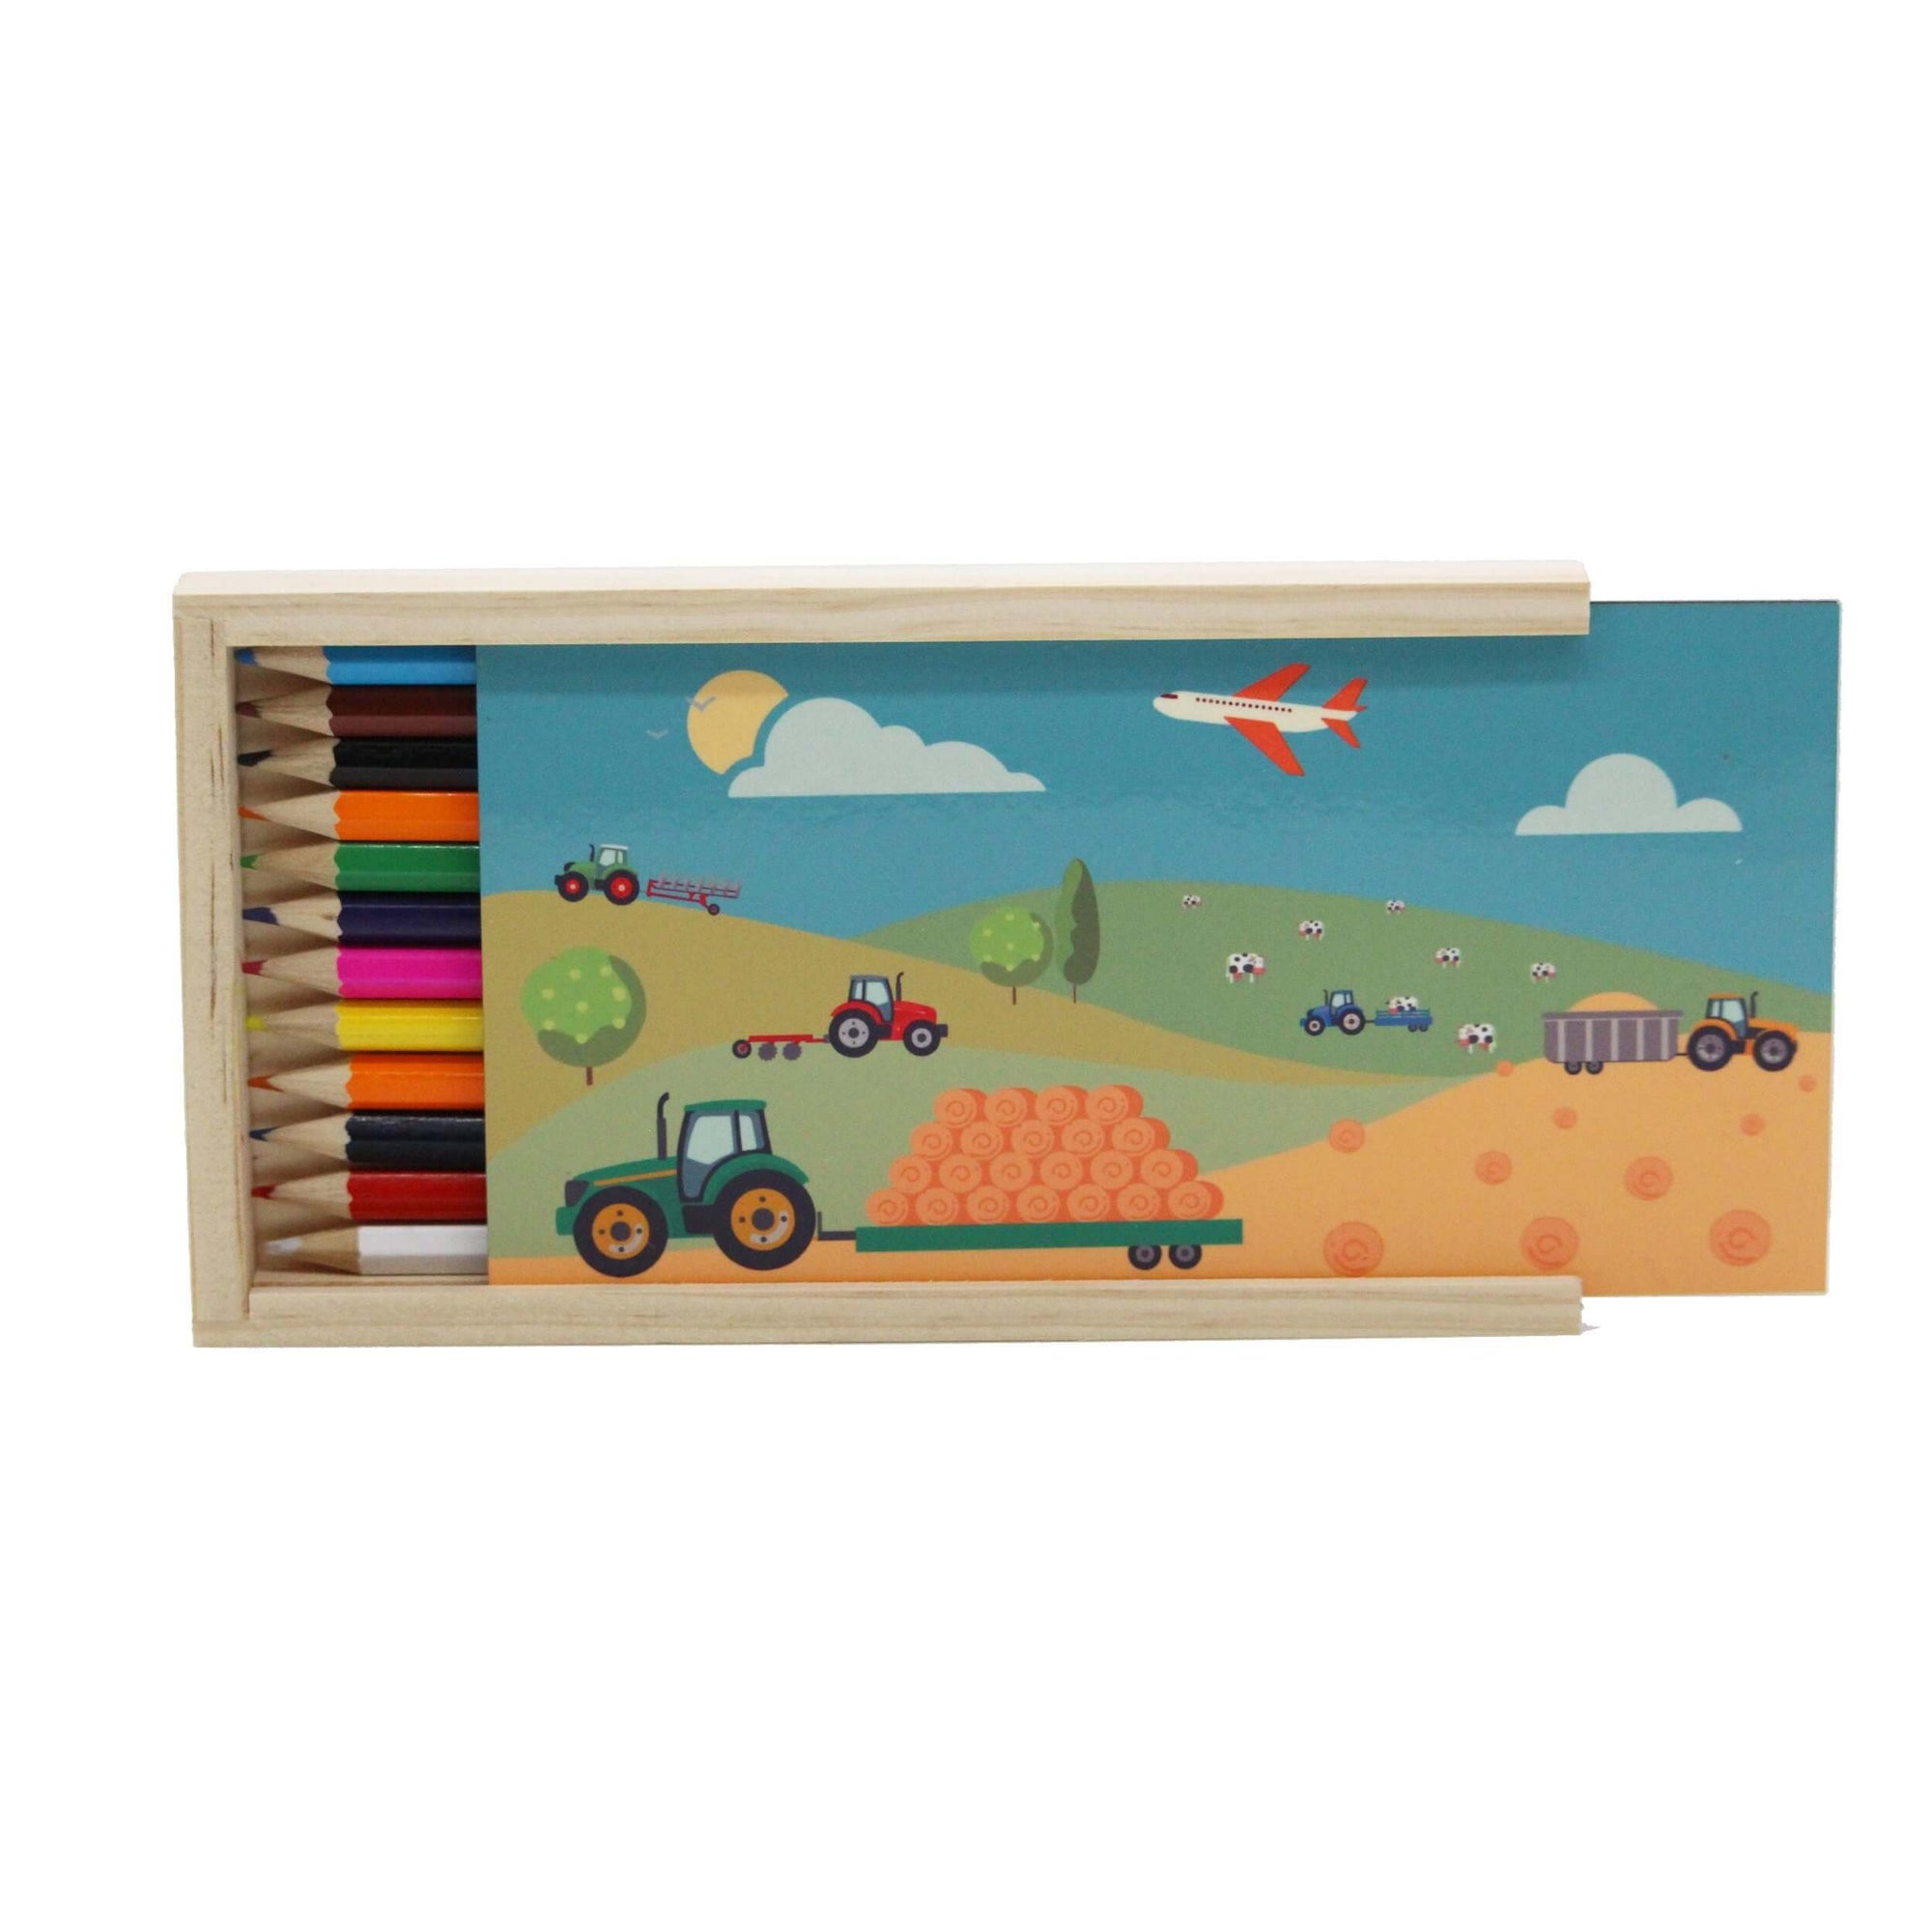 Bramble Hill Farm Pencil Box with Coloured Pencils  Mustard and Gray Ltd Shropshire UK